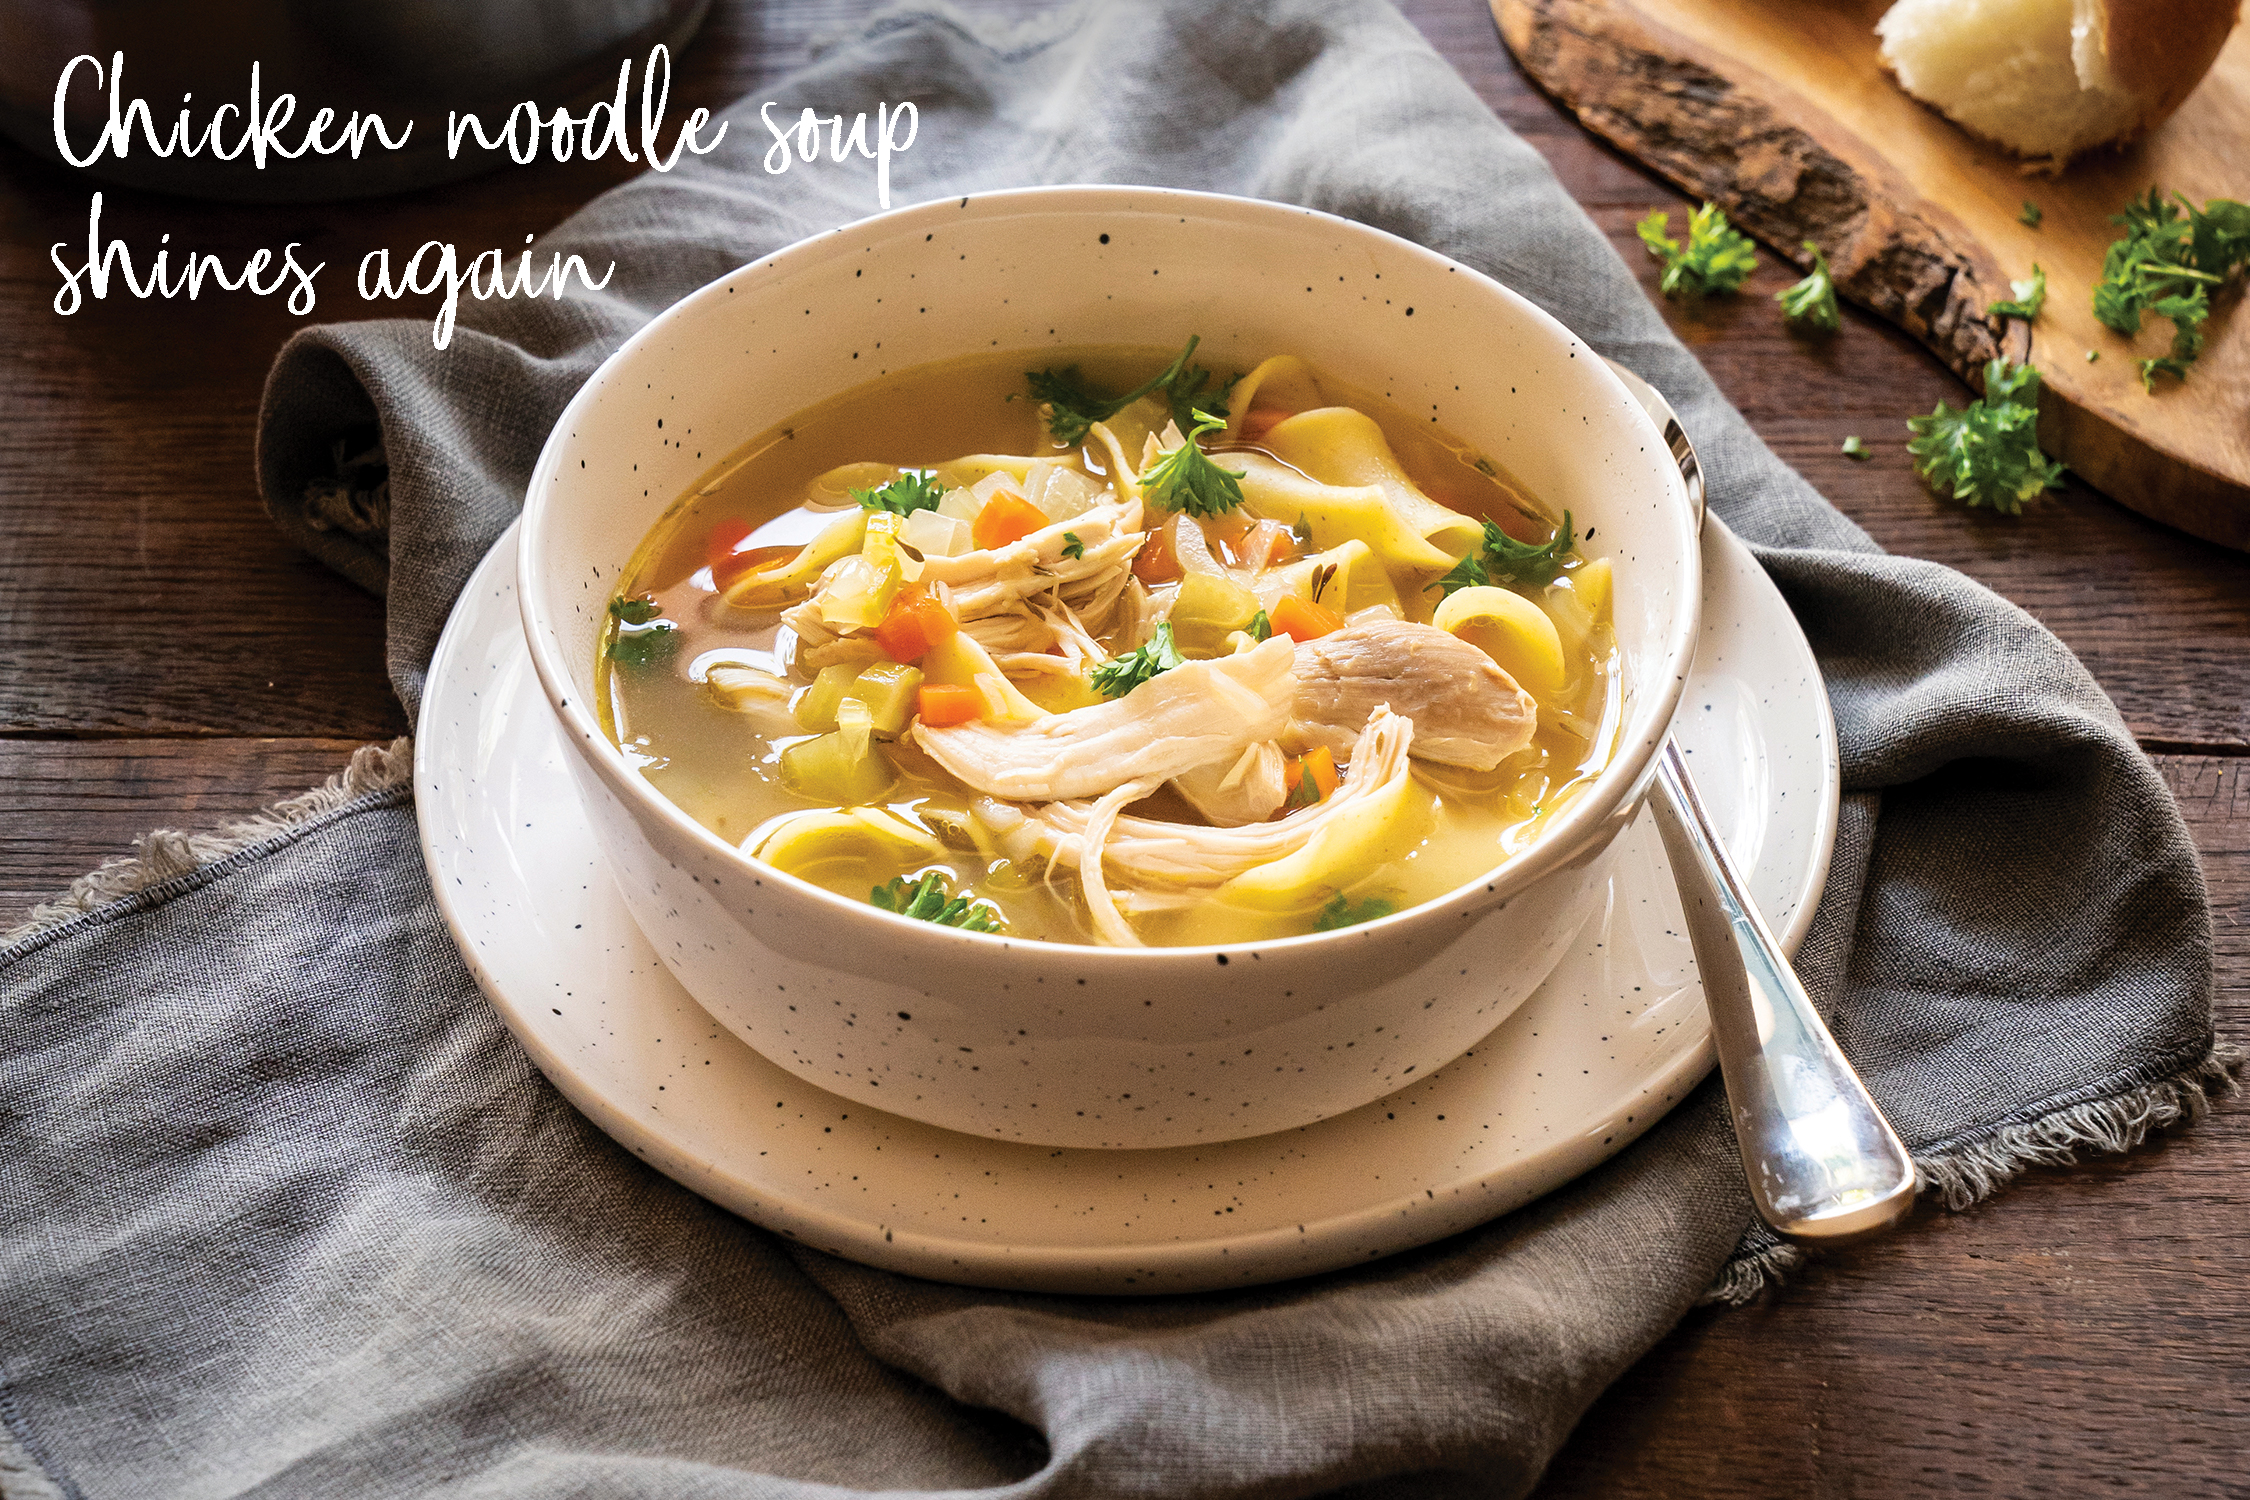 https://www.deliciousliving.com/files/uploads/2020/08/Chicken-Noodle-soup-1.jpg